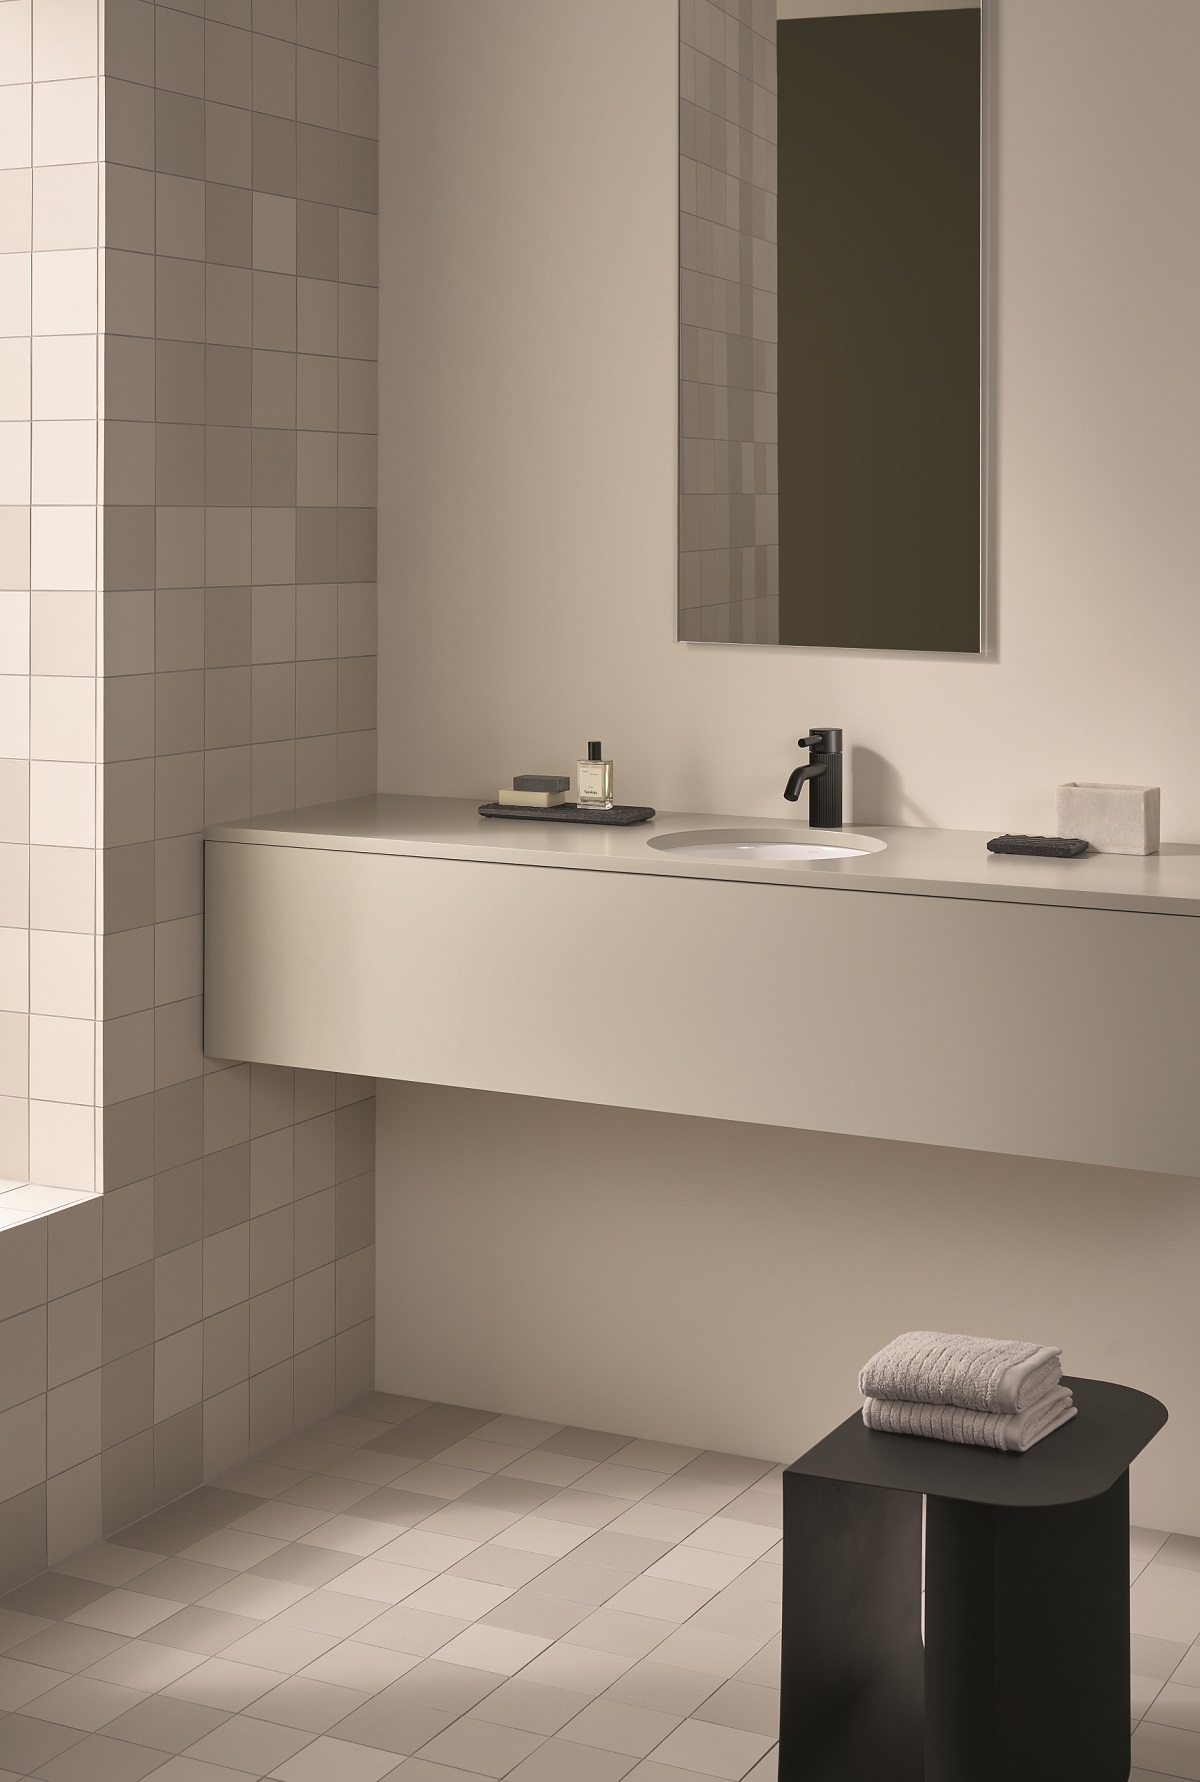 white bathroom with Meta tap by dornbracht in black